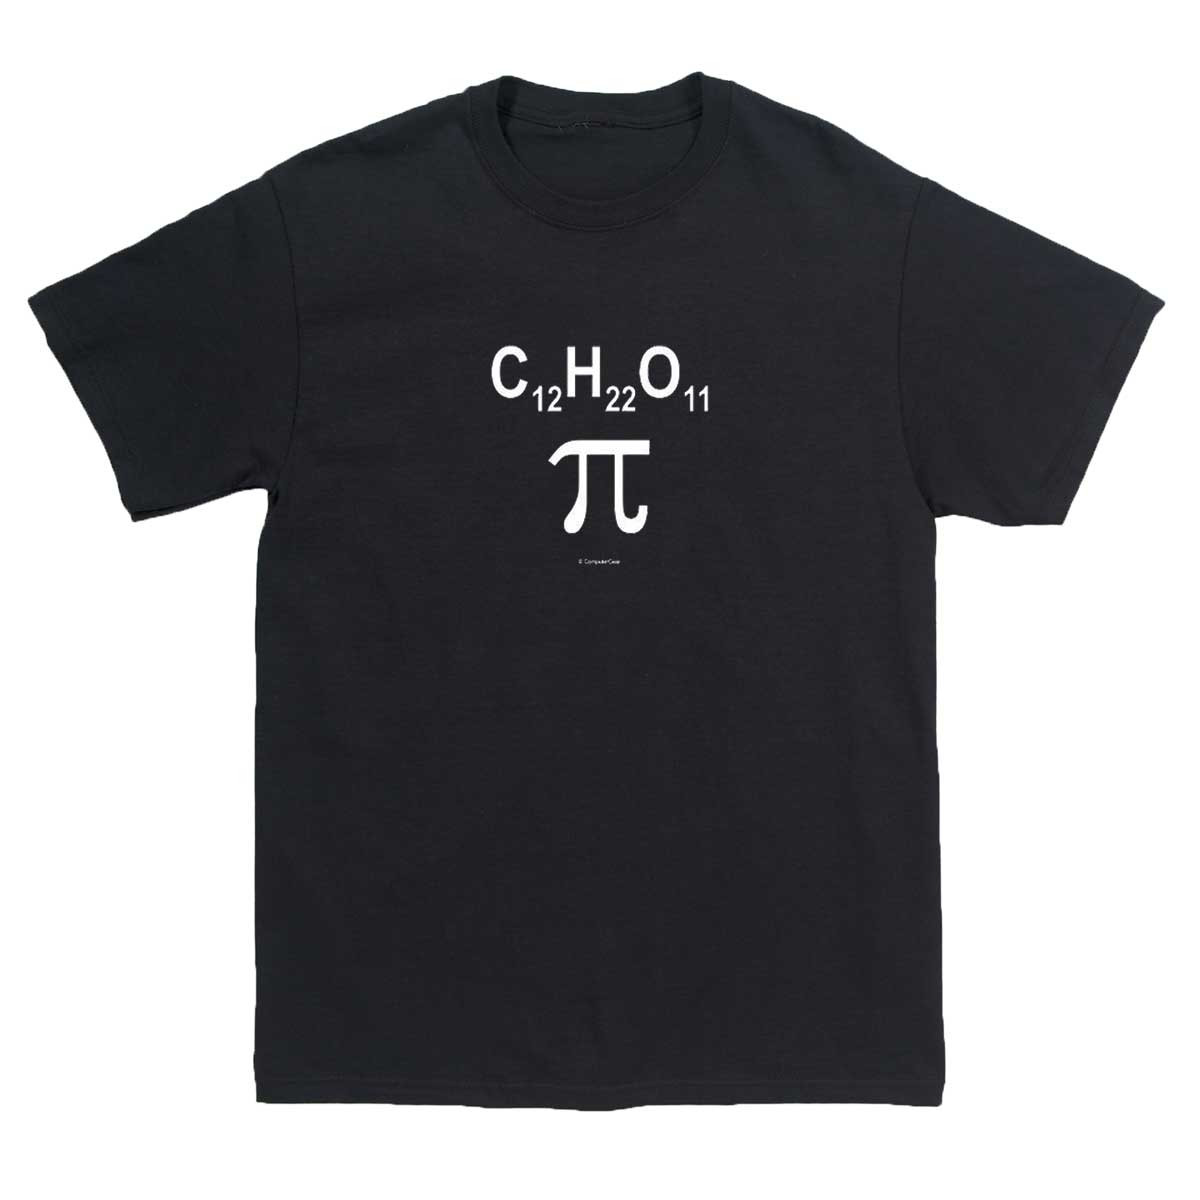 Pi Day T Shirt Ideas
 Smart girls won t mind being called a Sugar Pi wearing